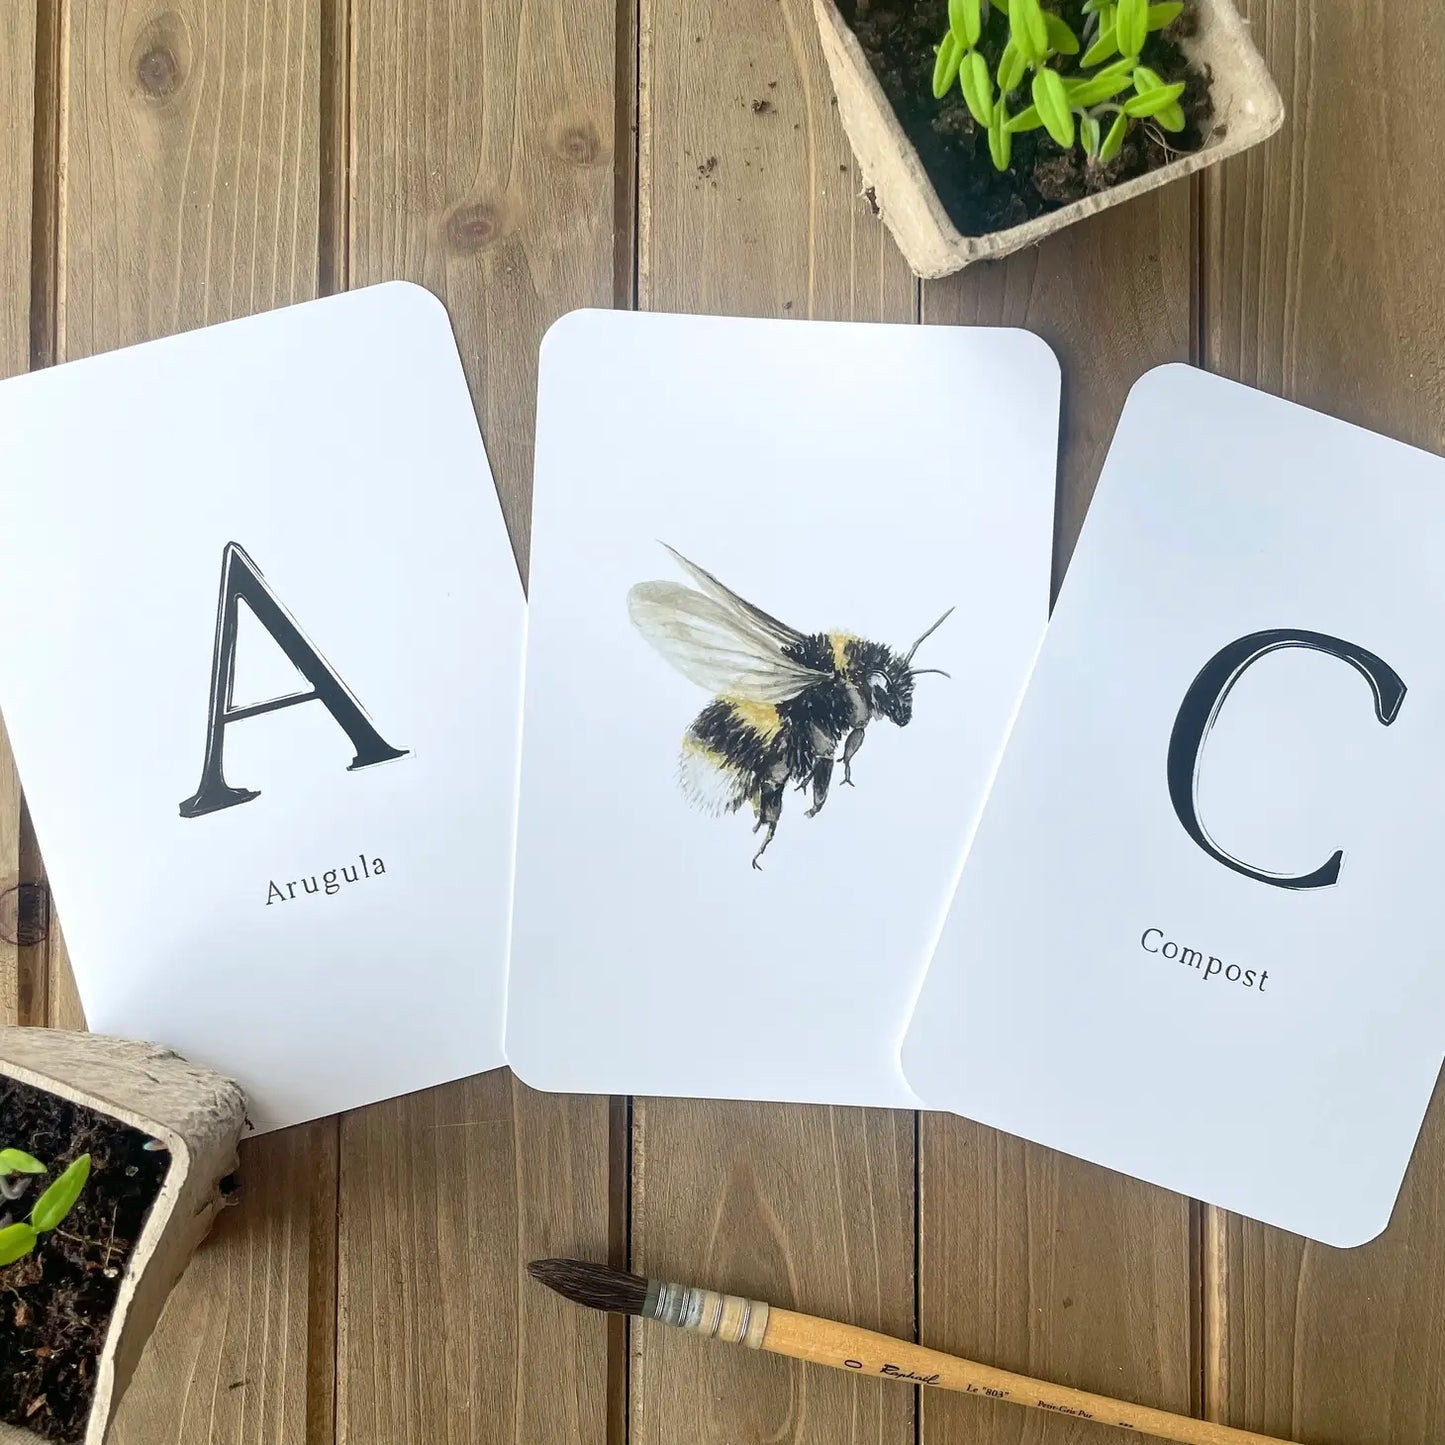 Garden Alphabet Cards